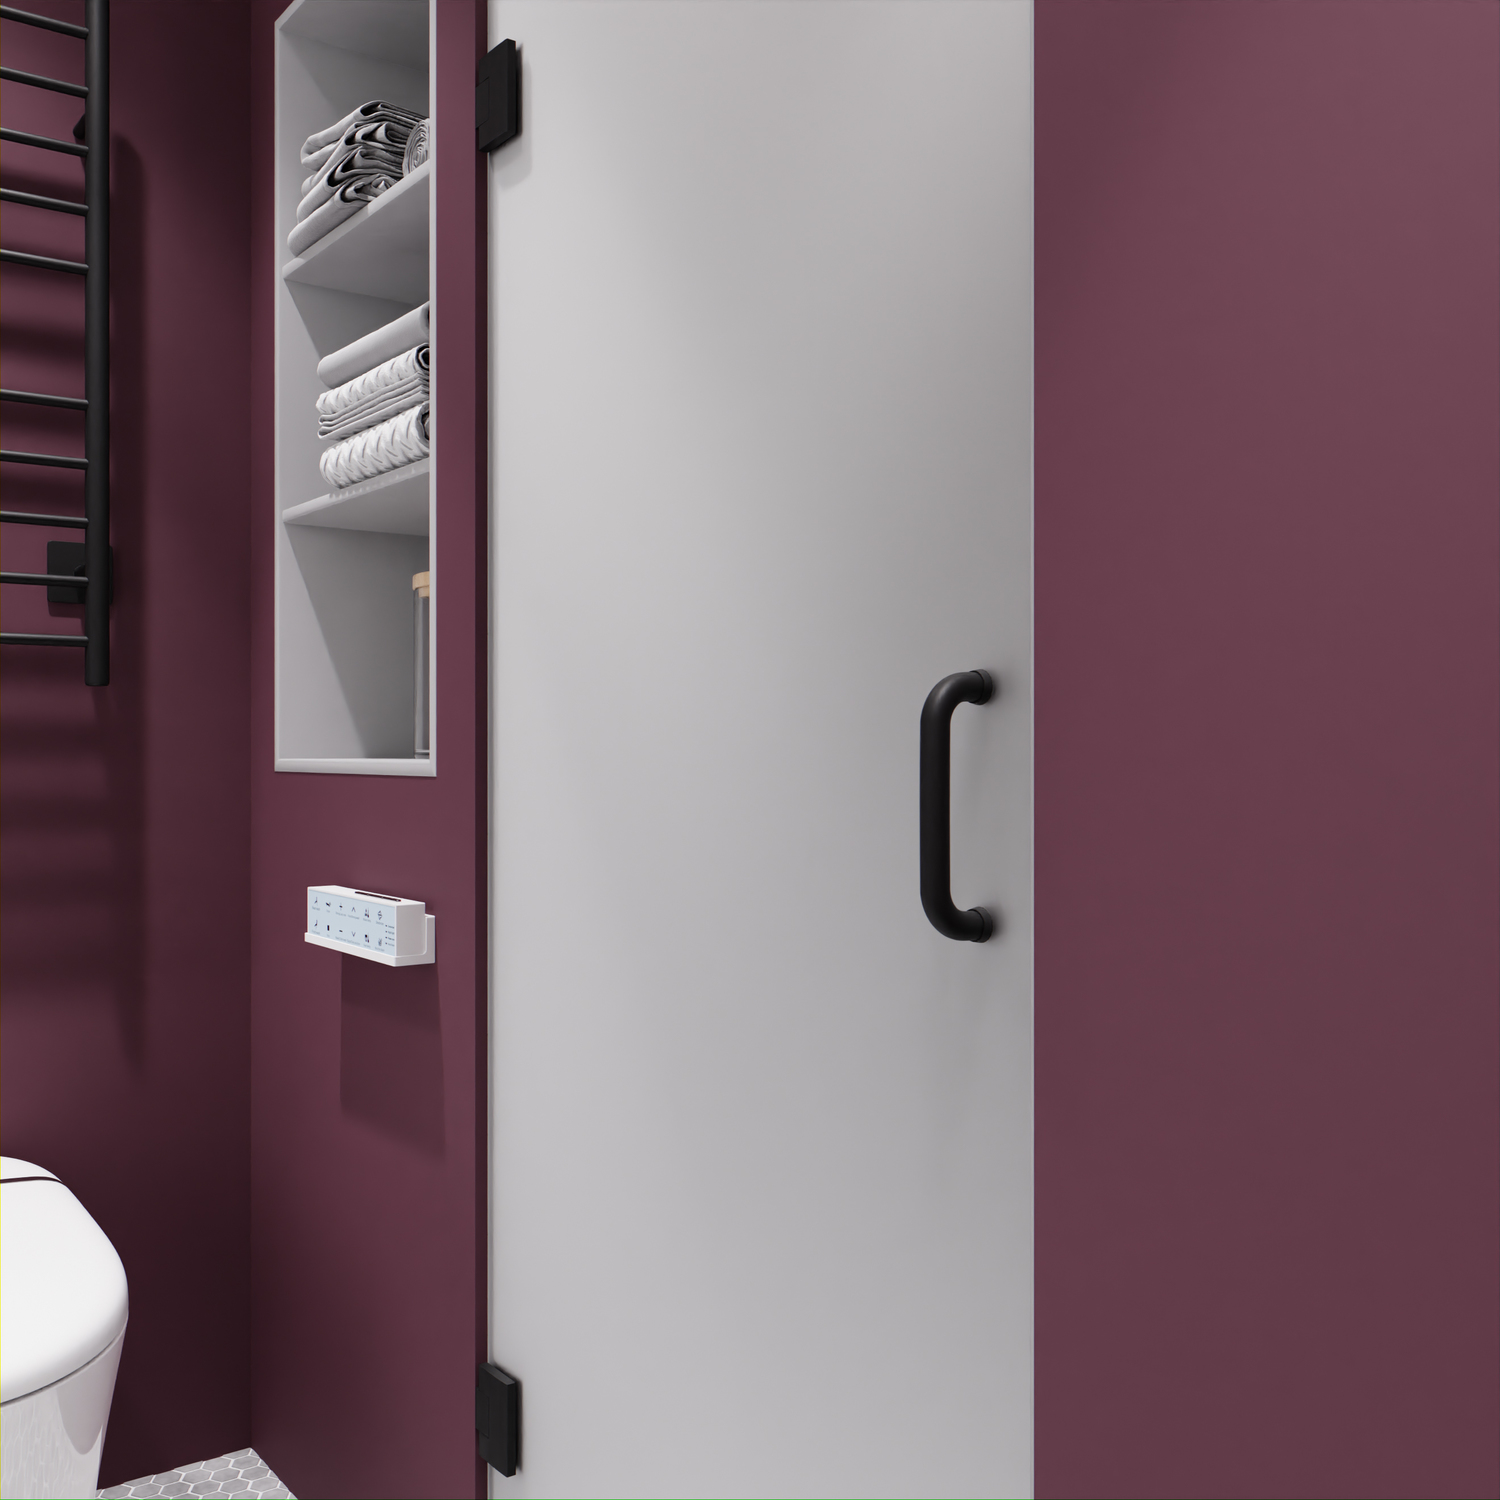 bathtub shower enclosure kits Anzzi SHOWER - Shower Doors - Hinged Black